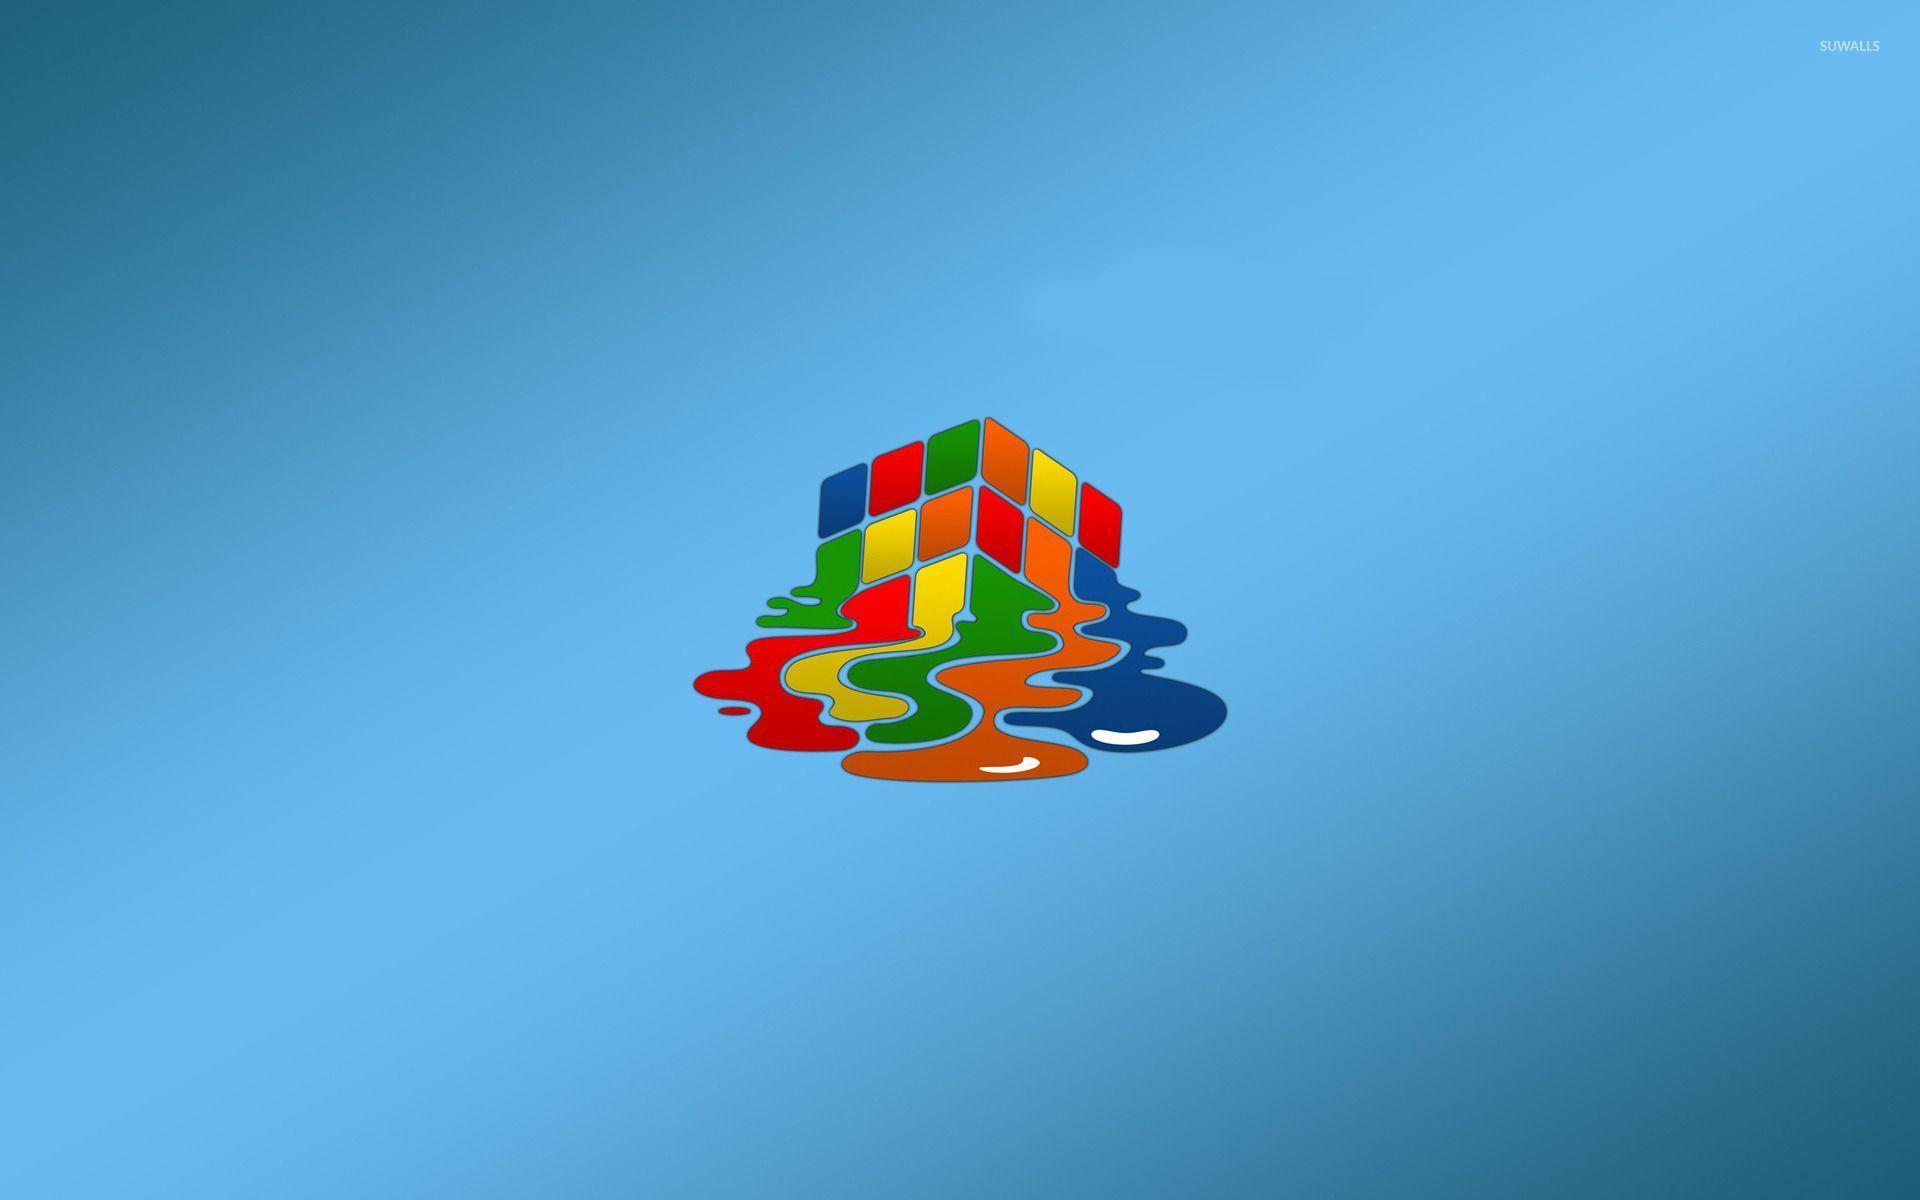 Melting Rubik's cube wallpaper wallpaper